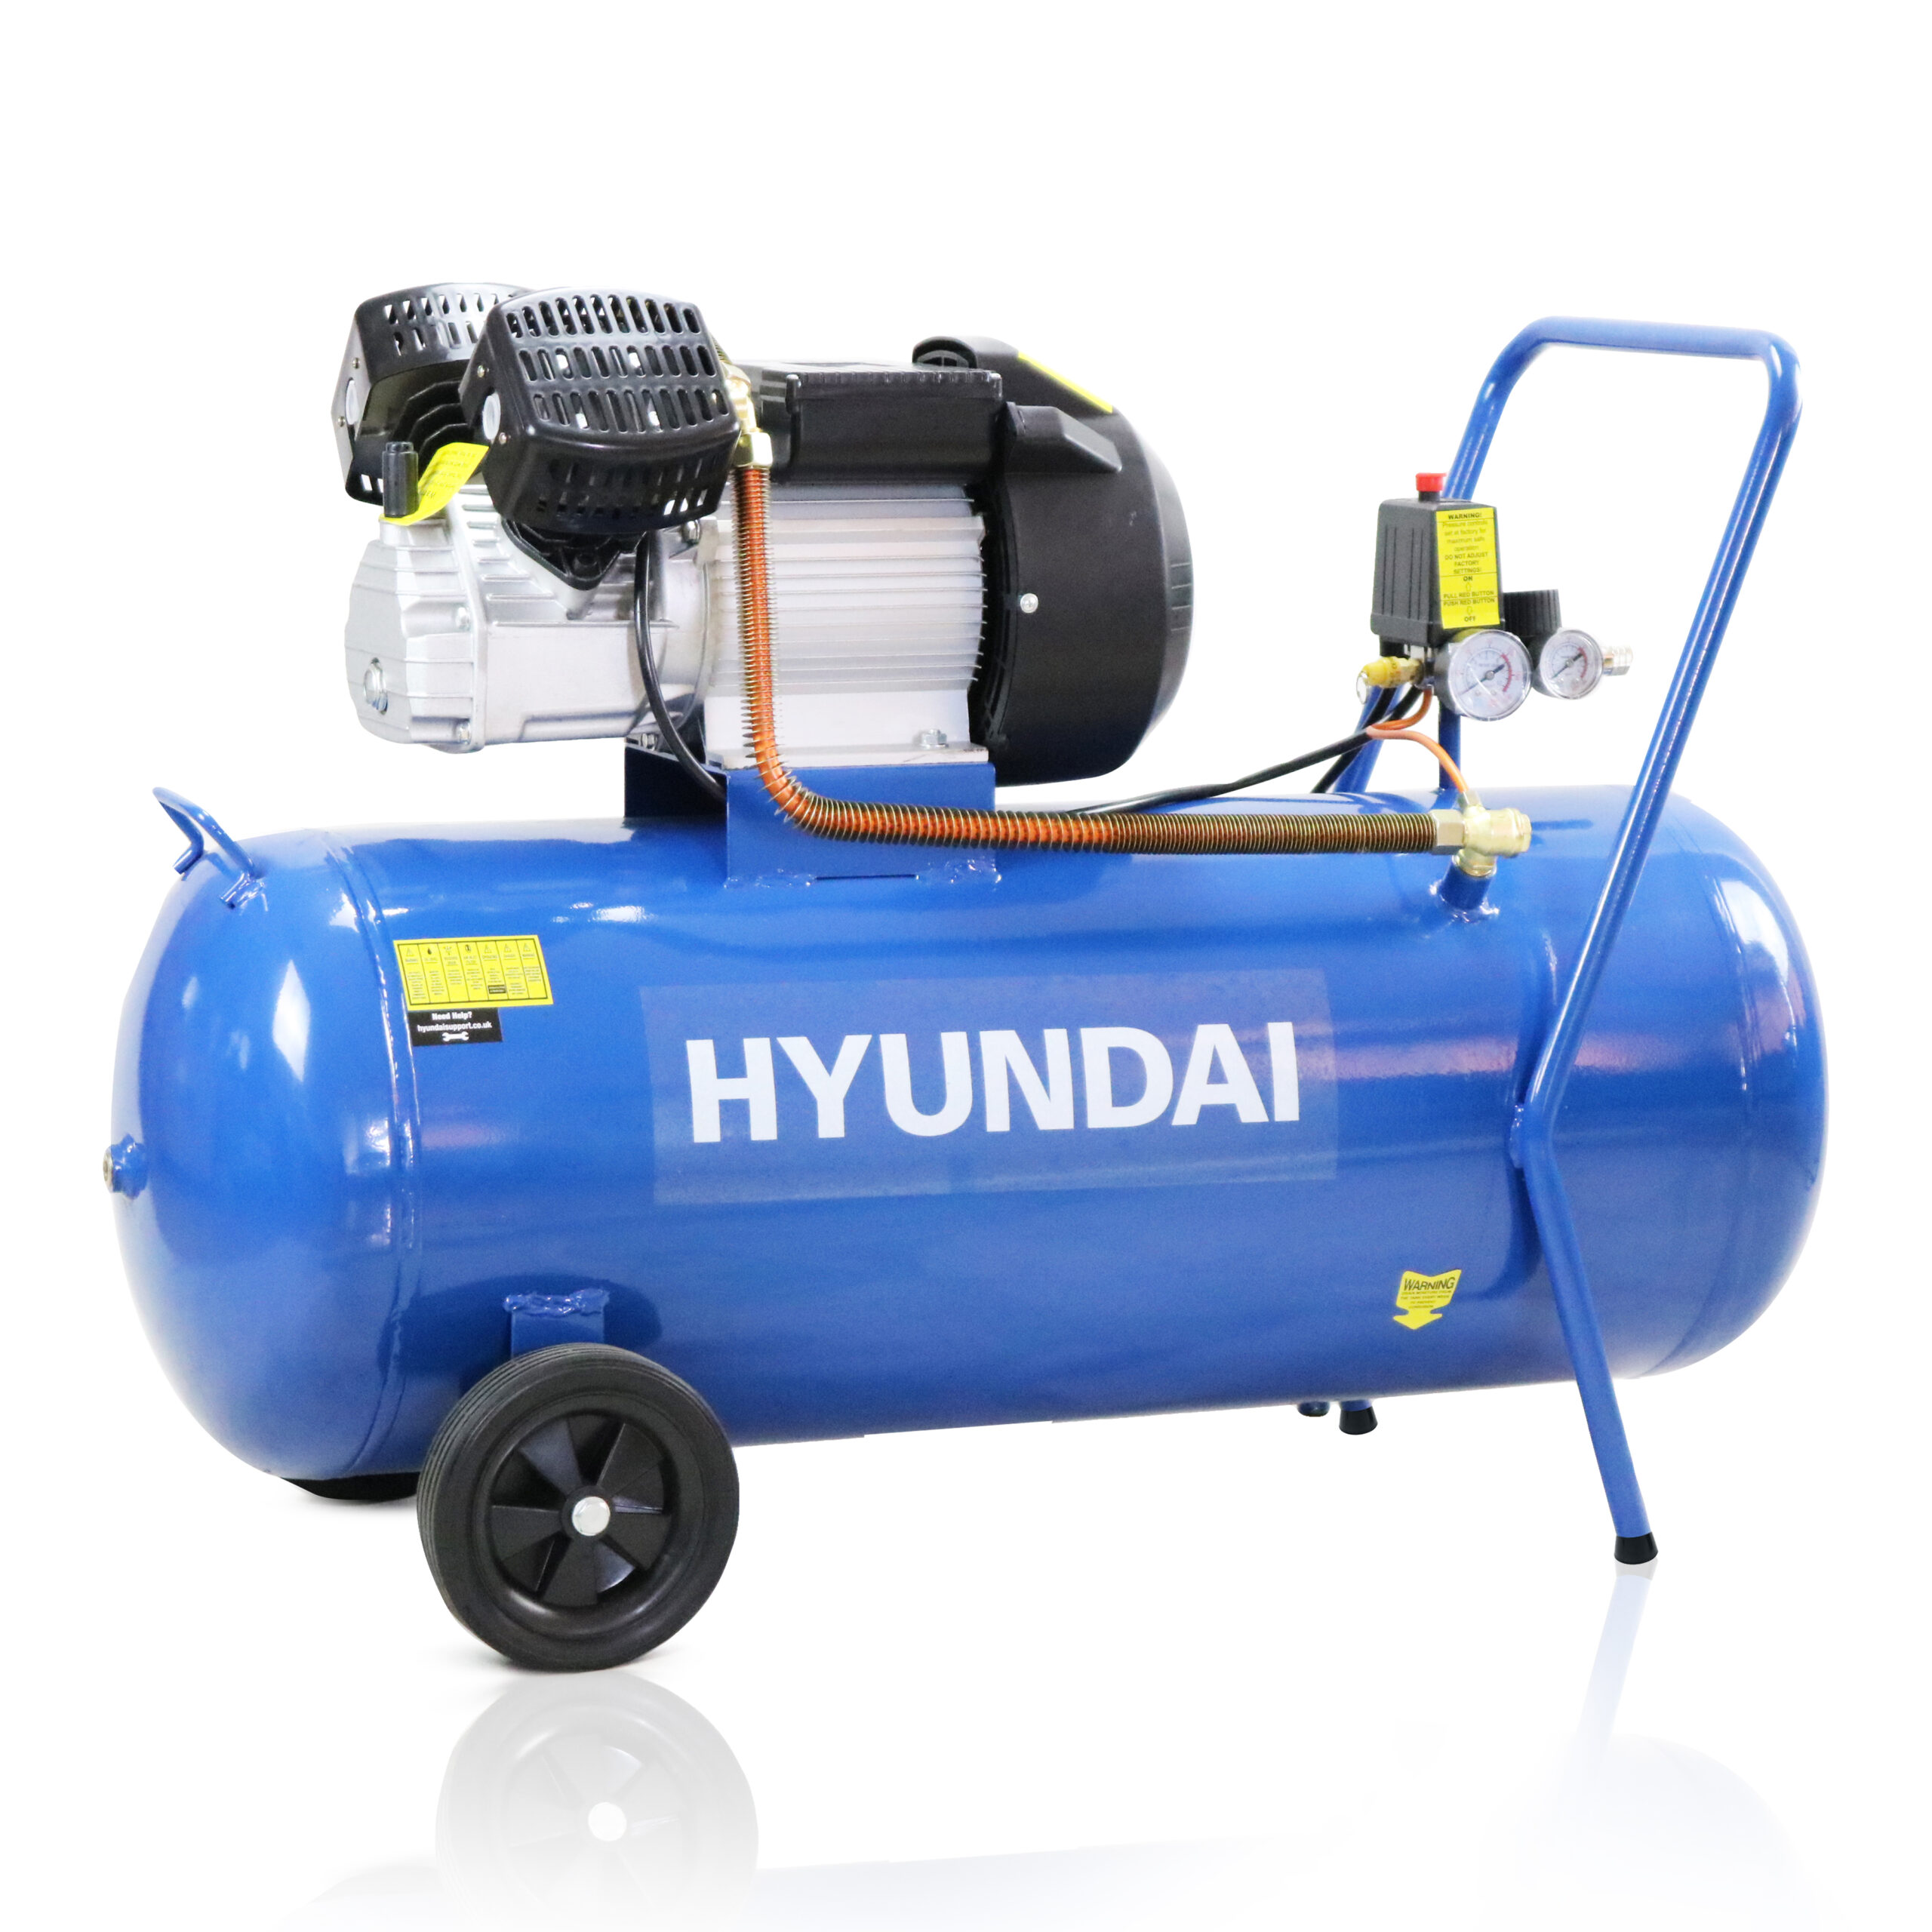 UK Suppliers Hyundai 100 Litre Air Compressor, Silenced, V Twin, Direct Drive - 14CFM, 3HP - HY30100V